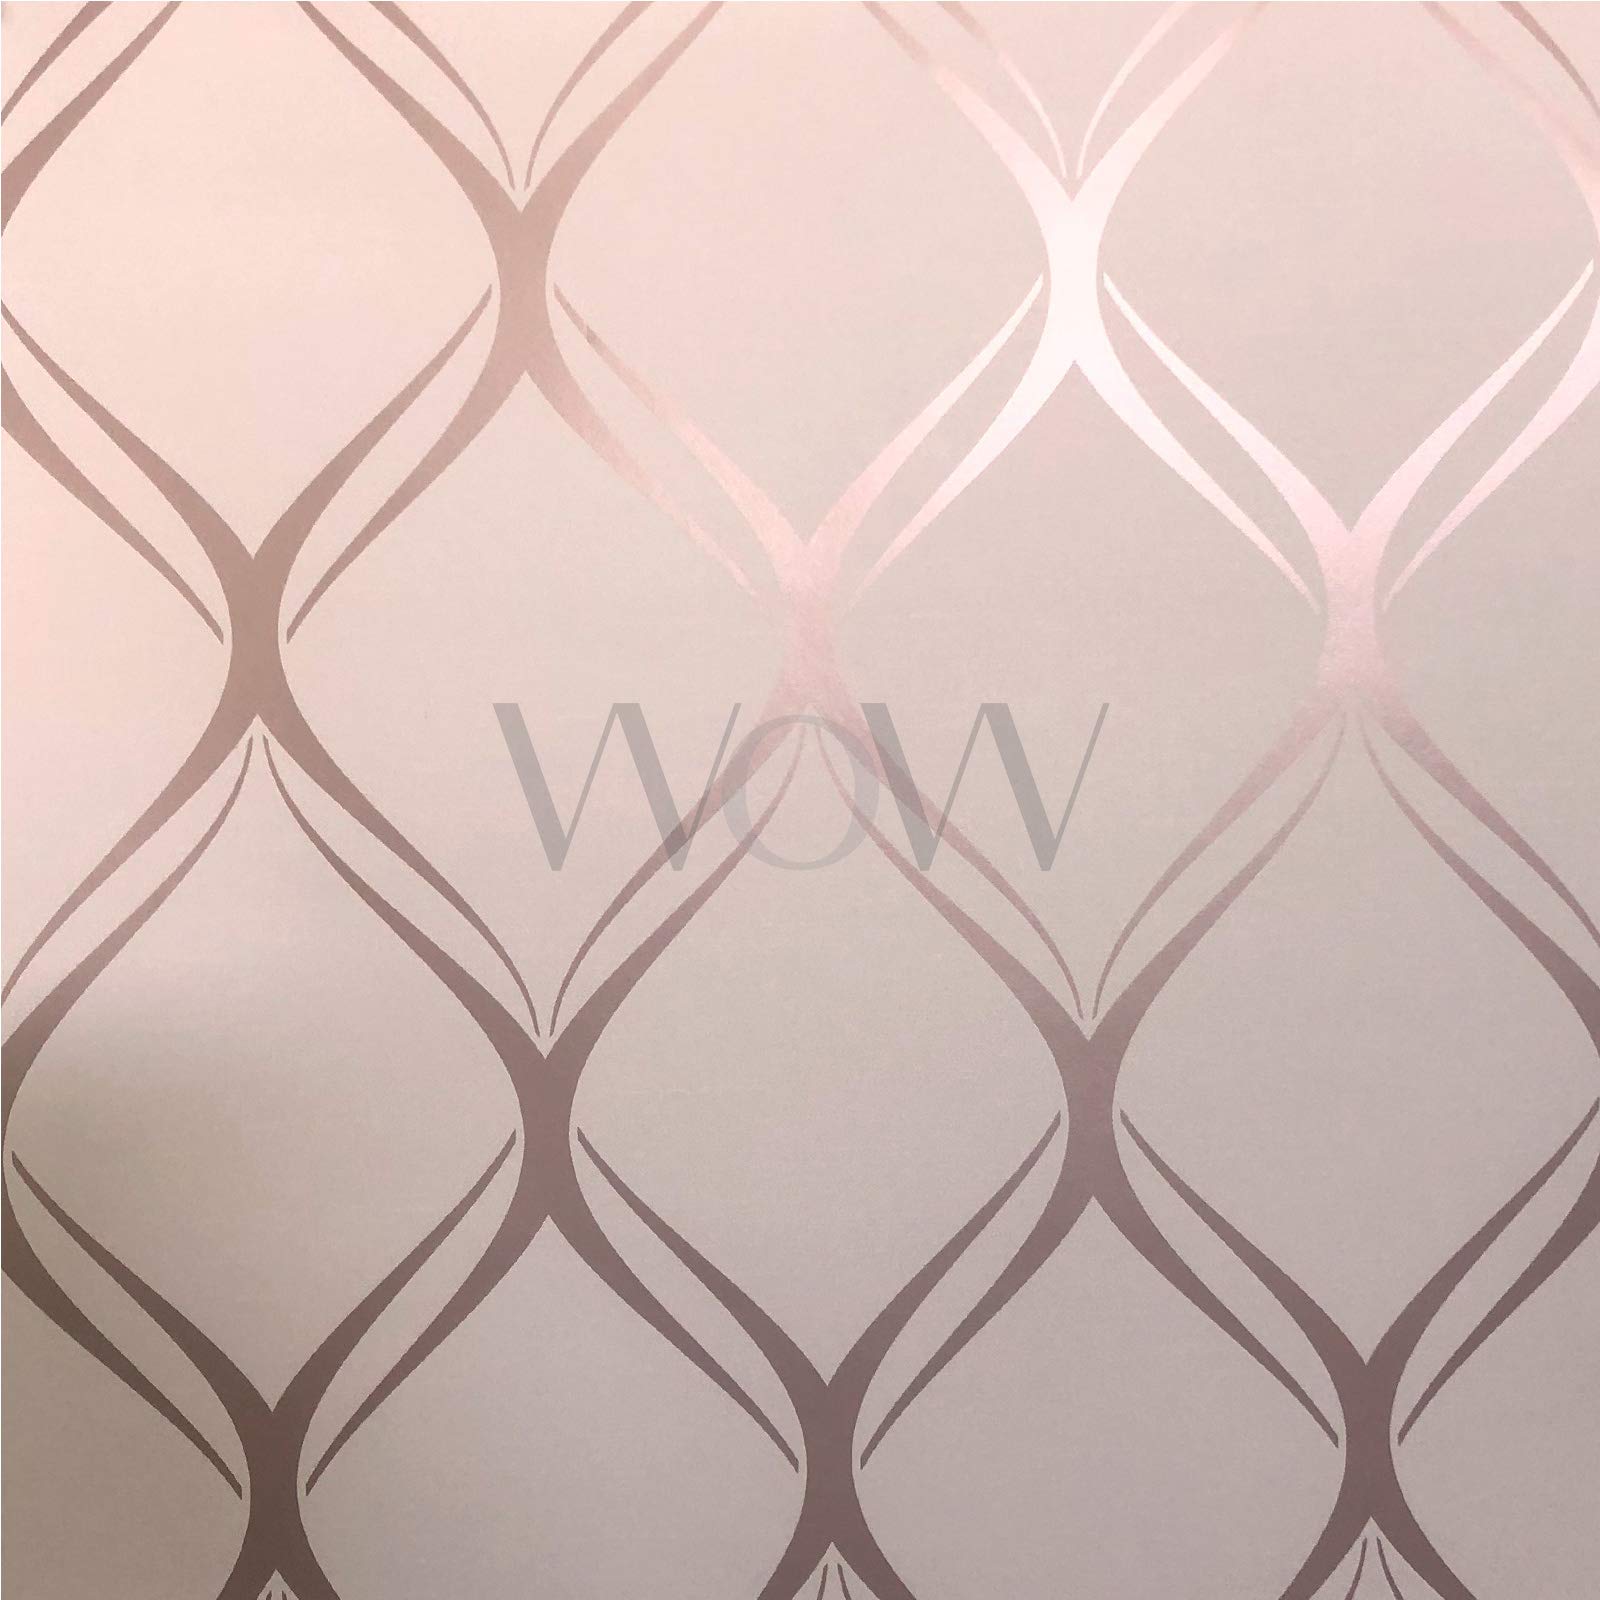 WM8423062 Wallpaper Beige Rose Gold Textured Geometric Trellis